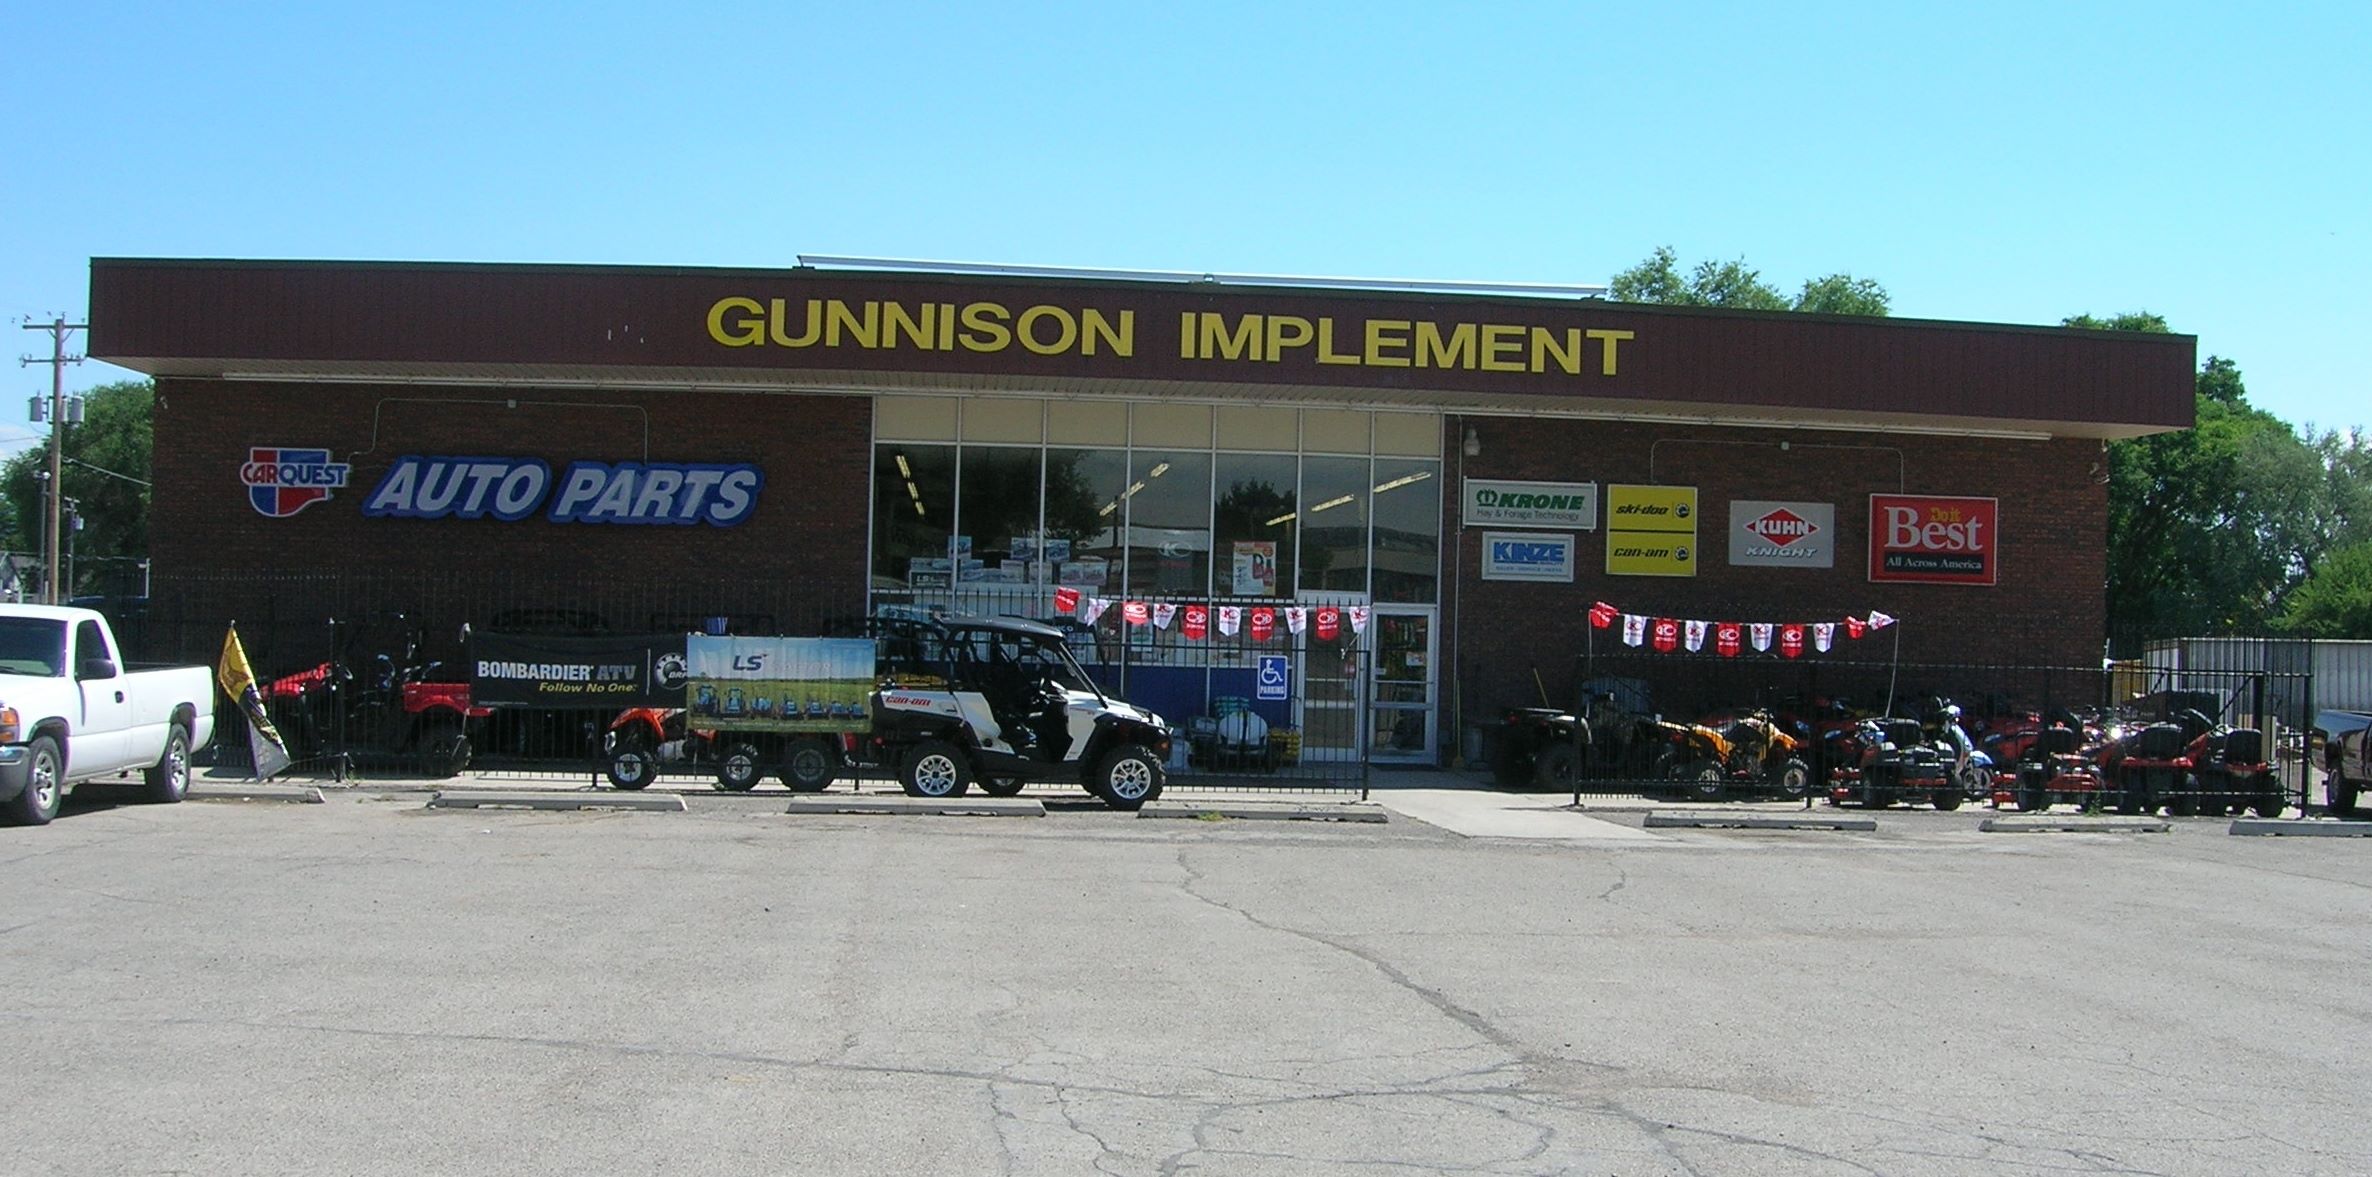 Gunnison Implentation Co